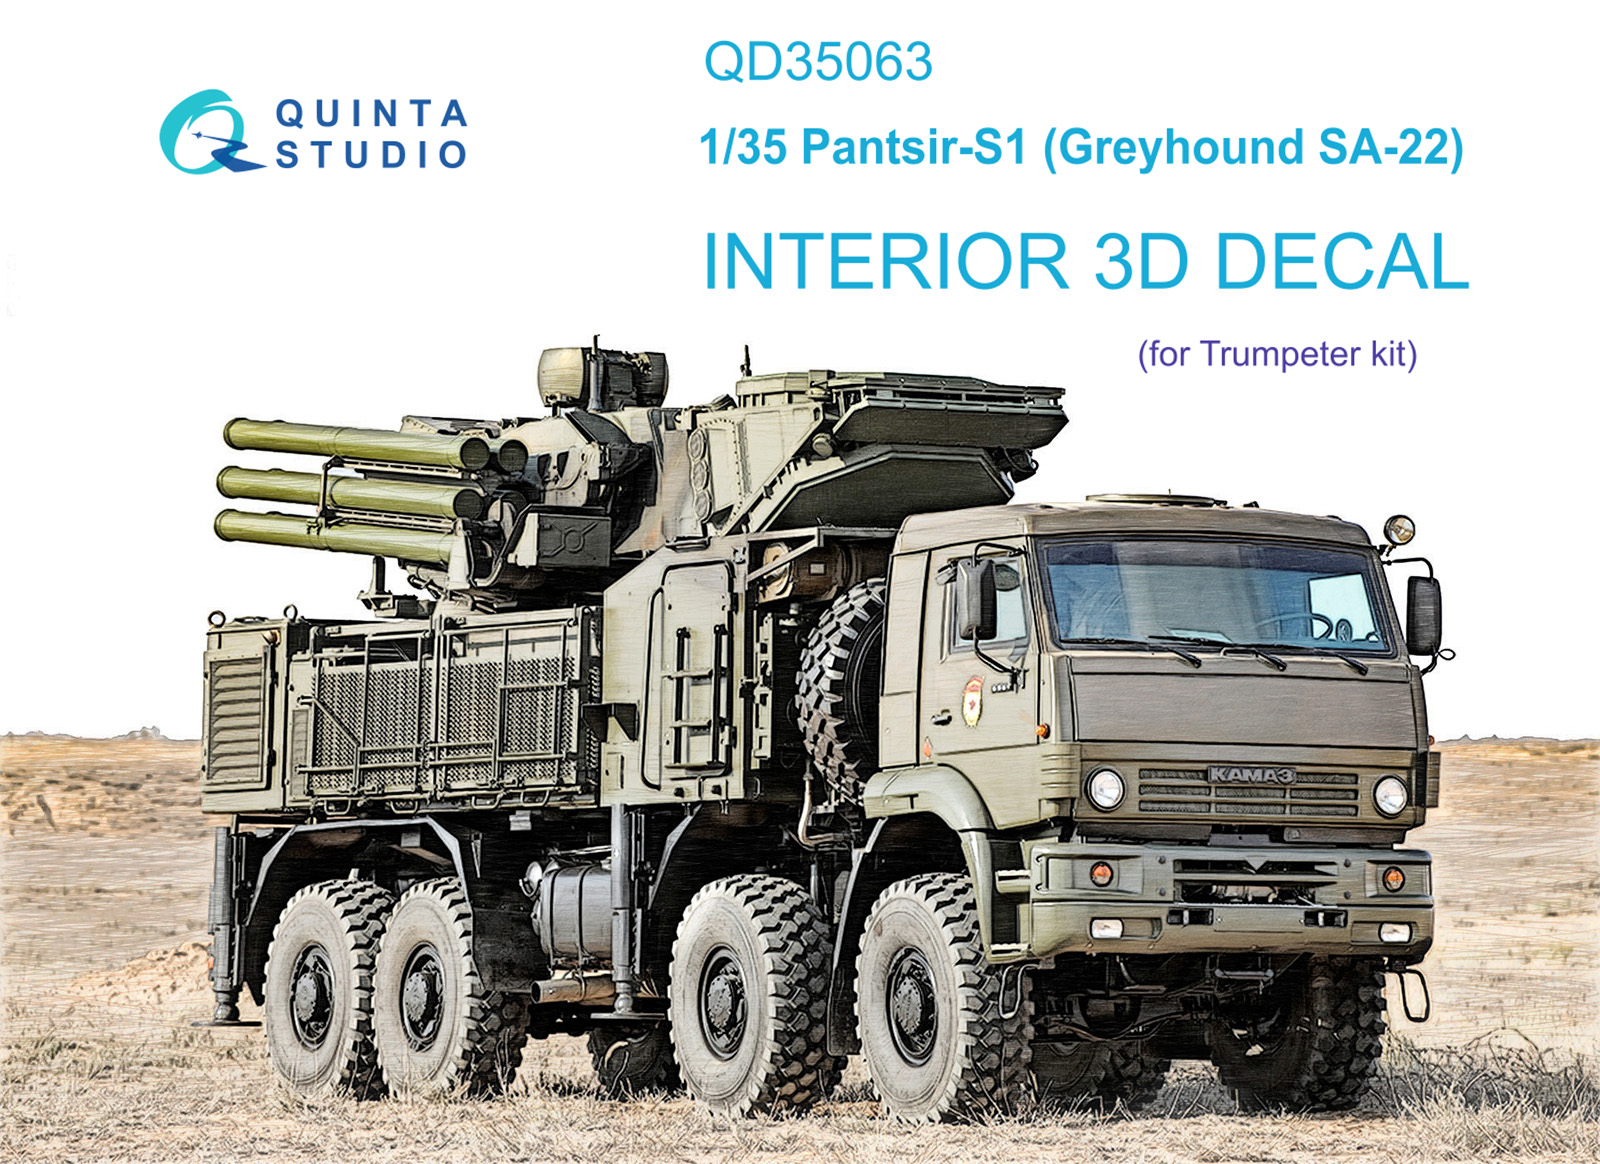 QD35063  декали  3D Декаль интерьера кабины Pantsir-S1  (SA-22 Greyhound) (Trumpeter)  (1:35)